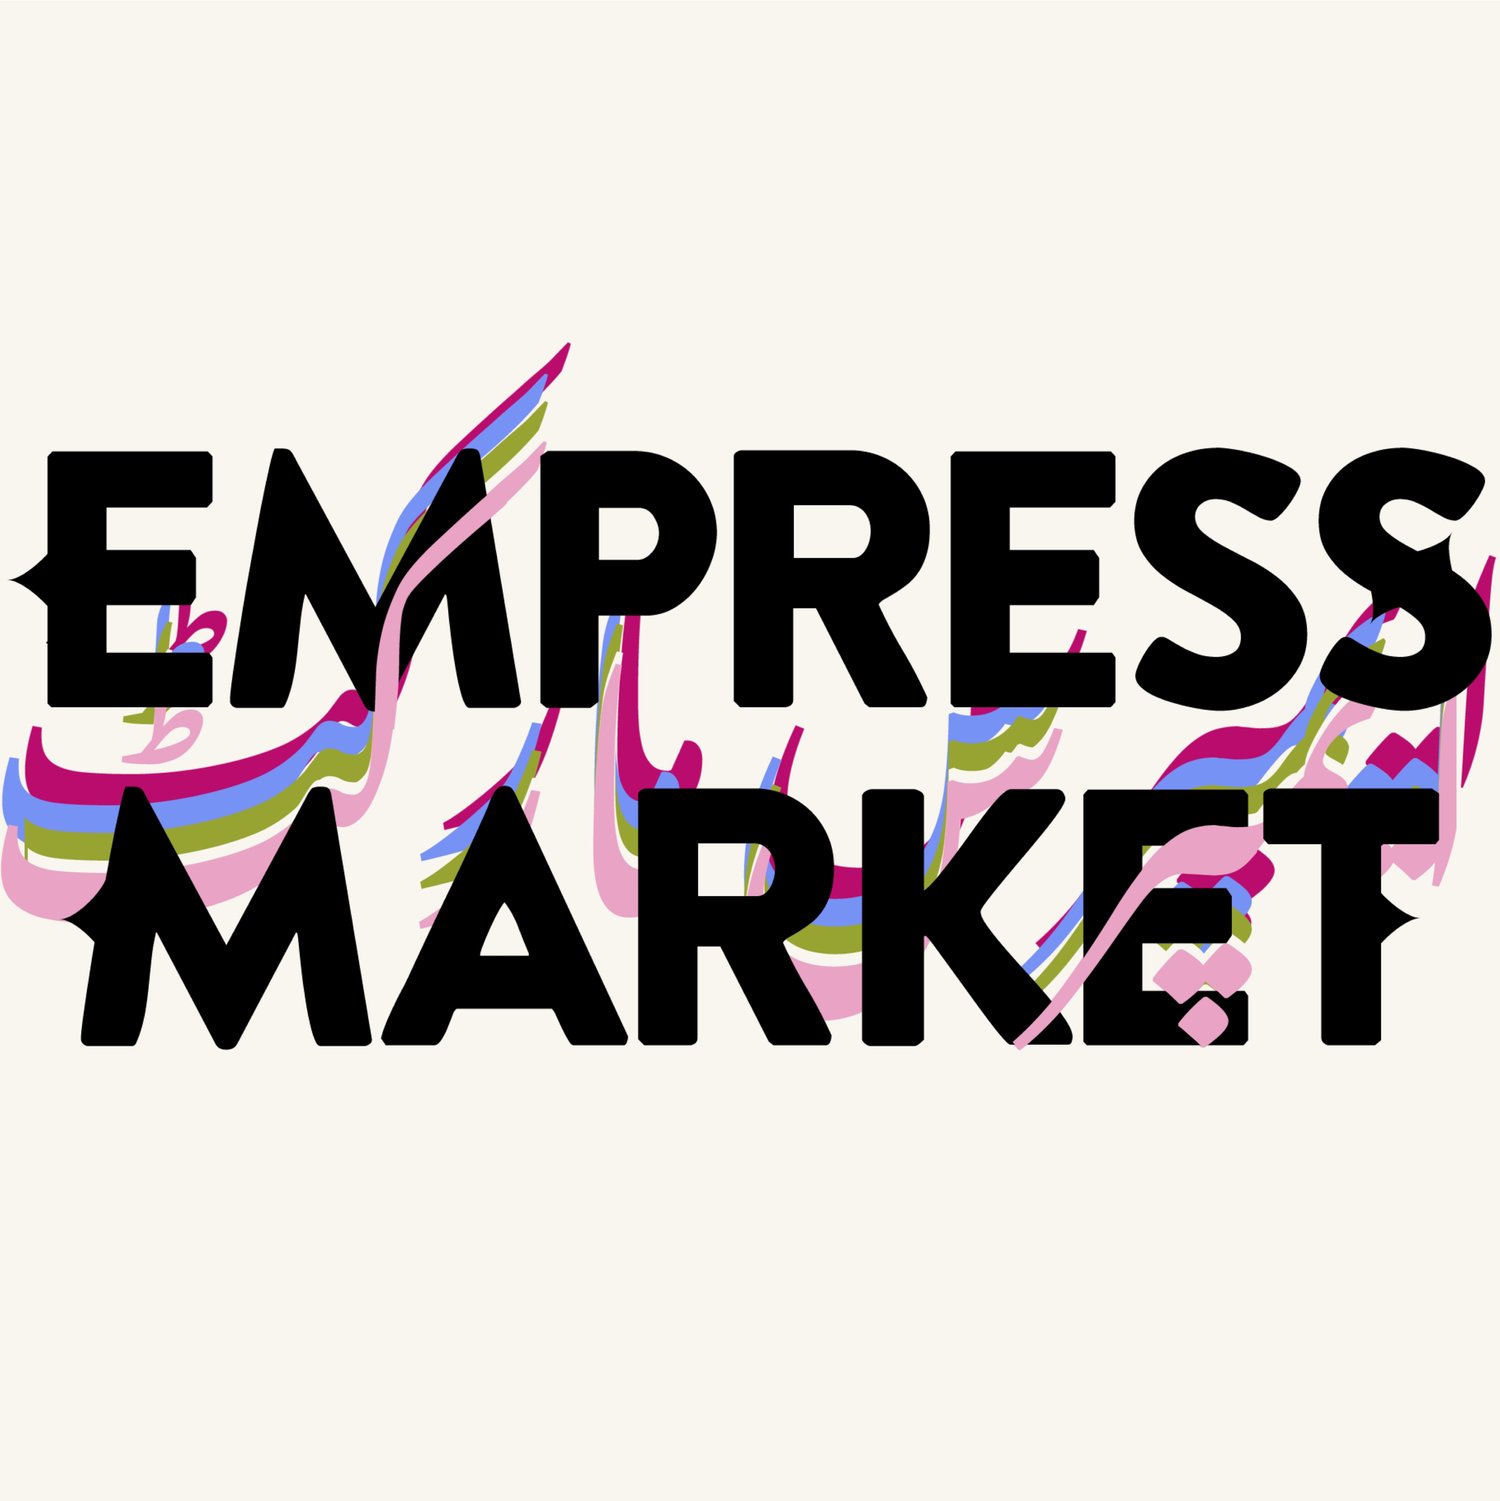 Empress Market